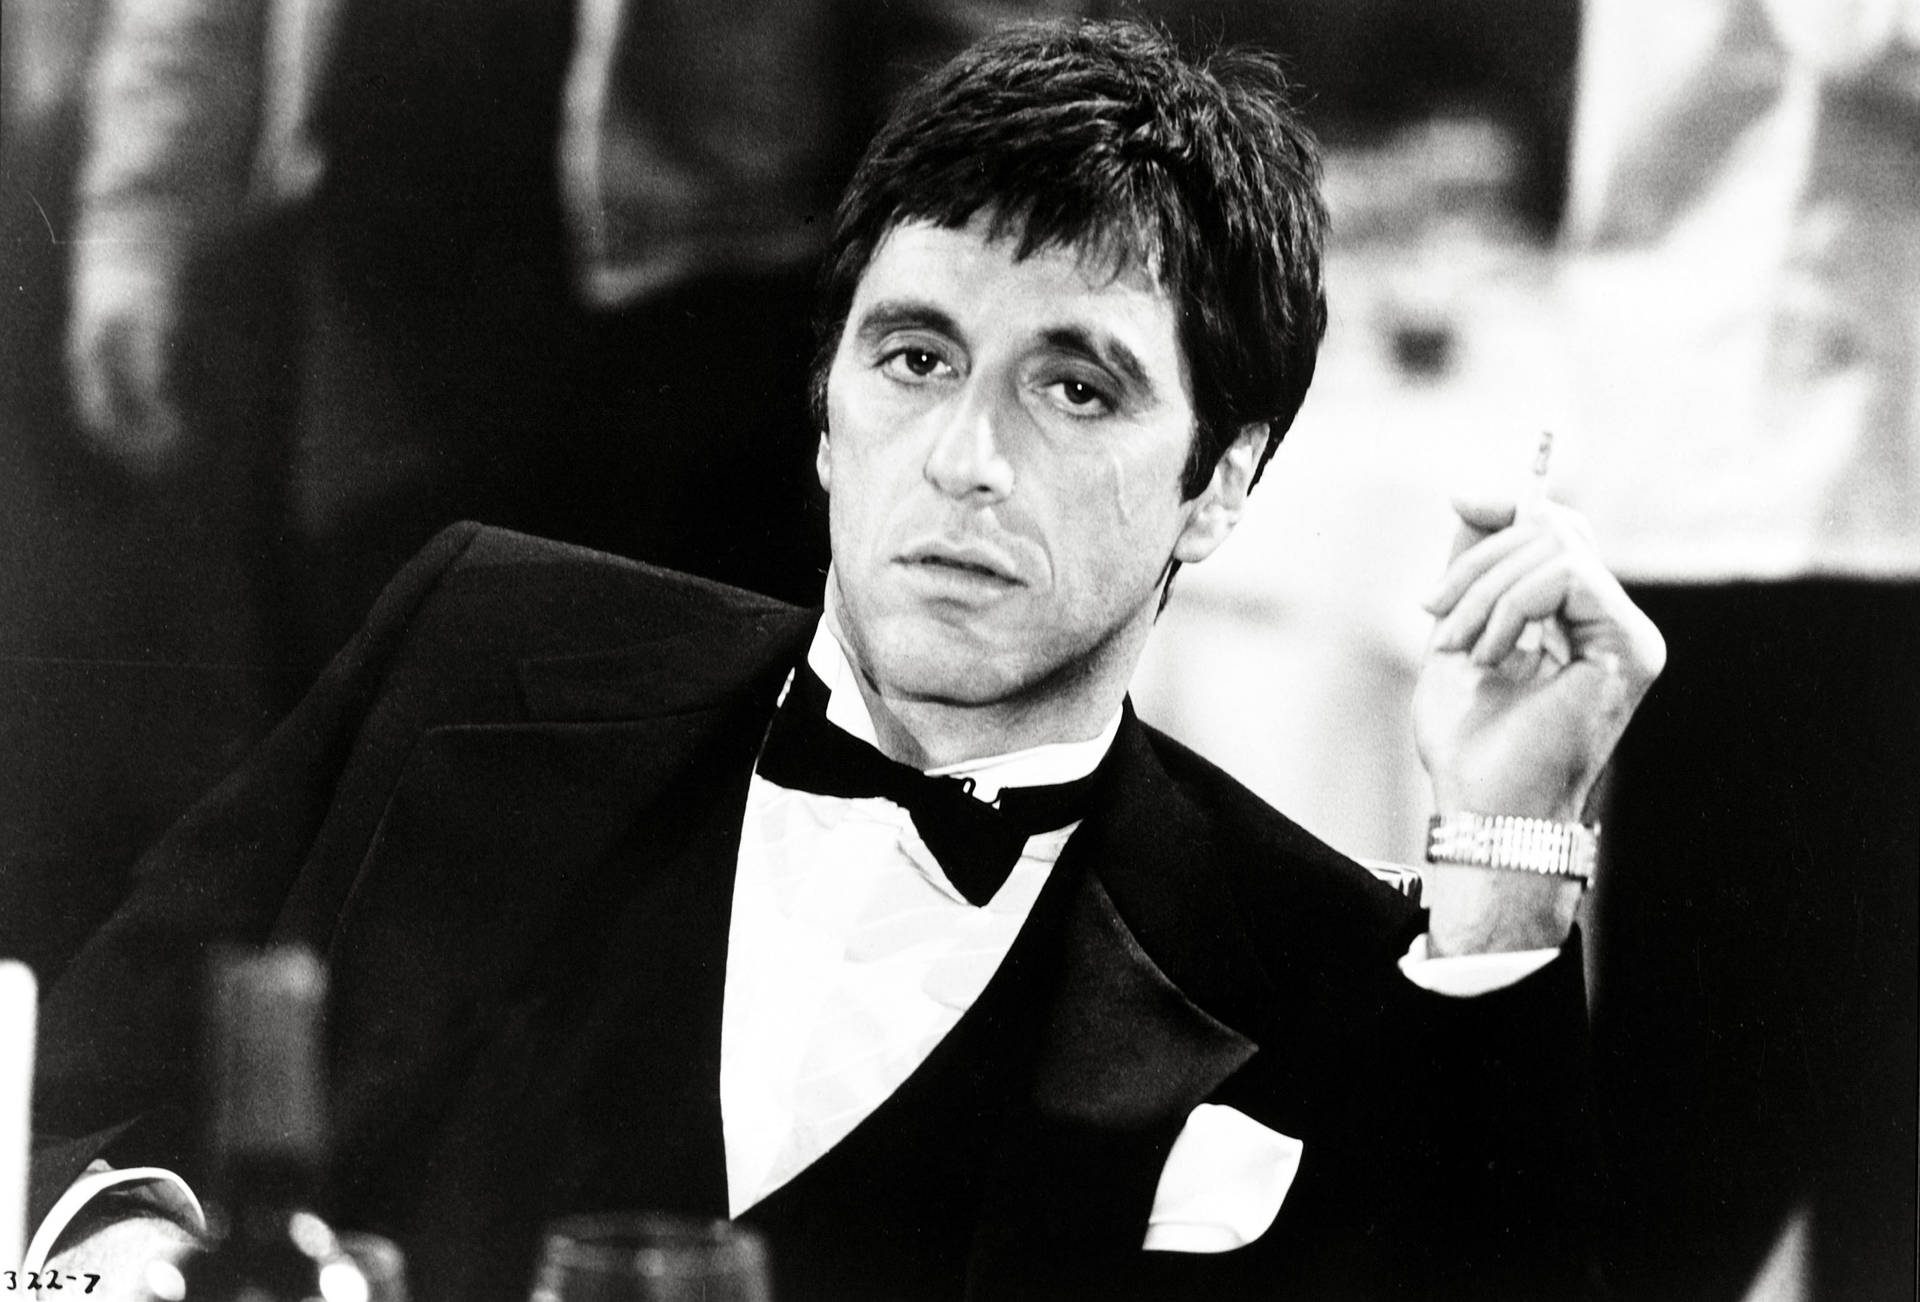 Smoking Al Pacino Scarface Wallpaper